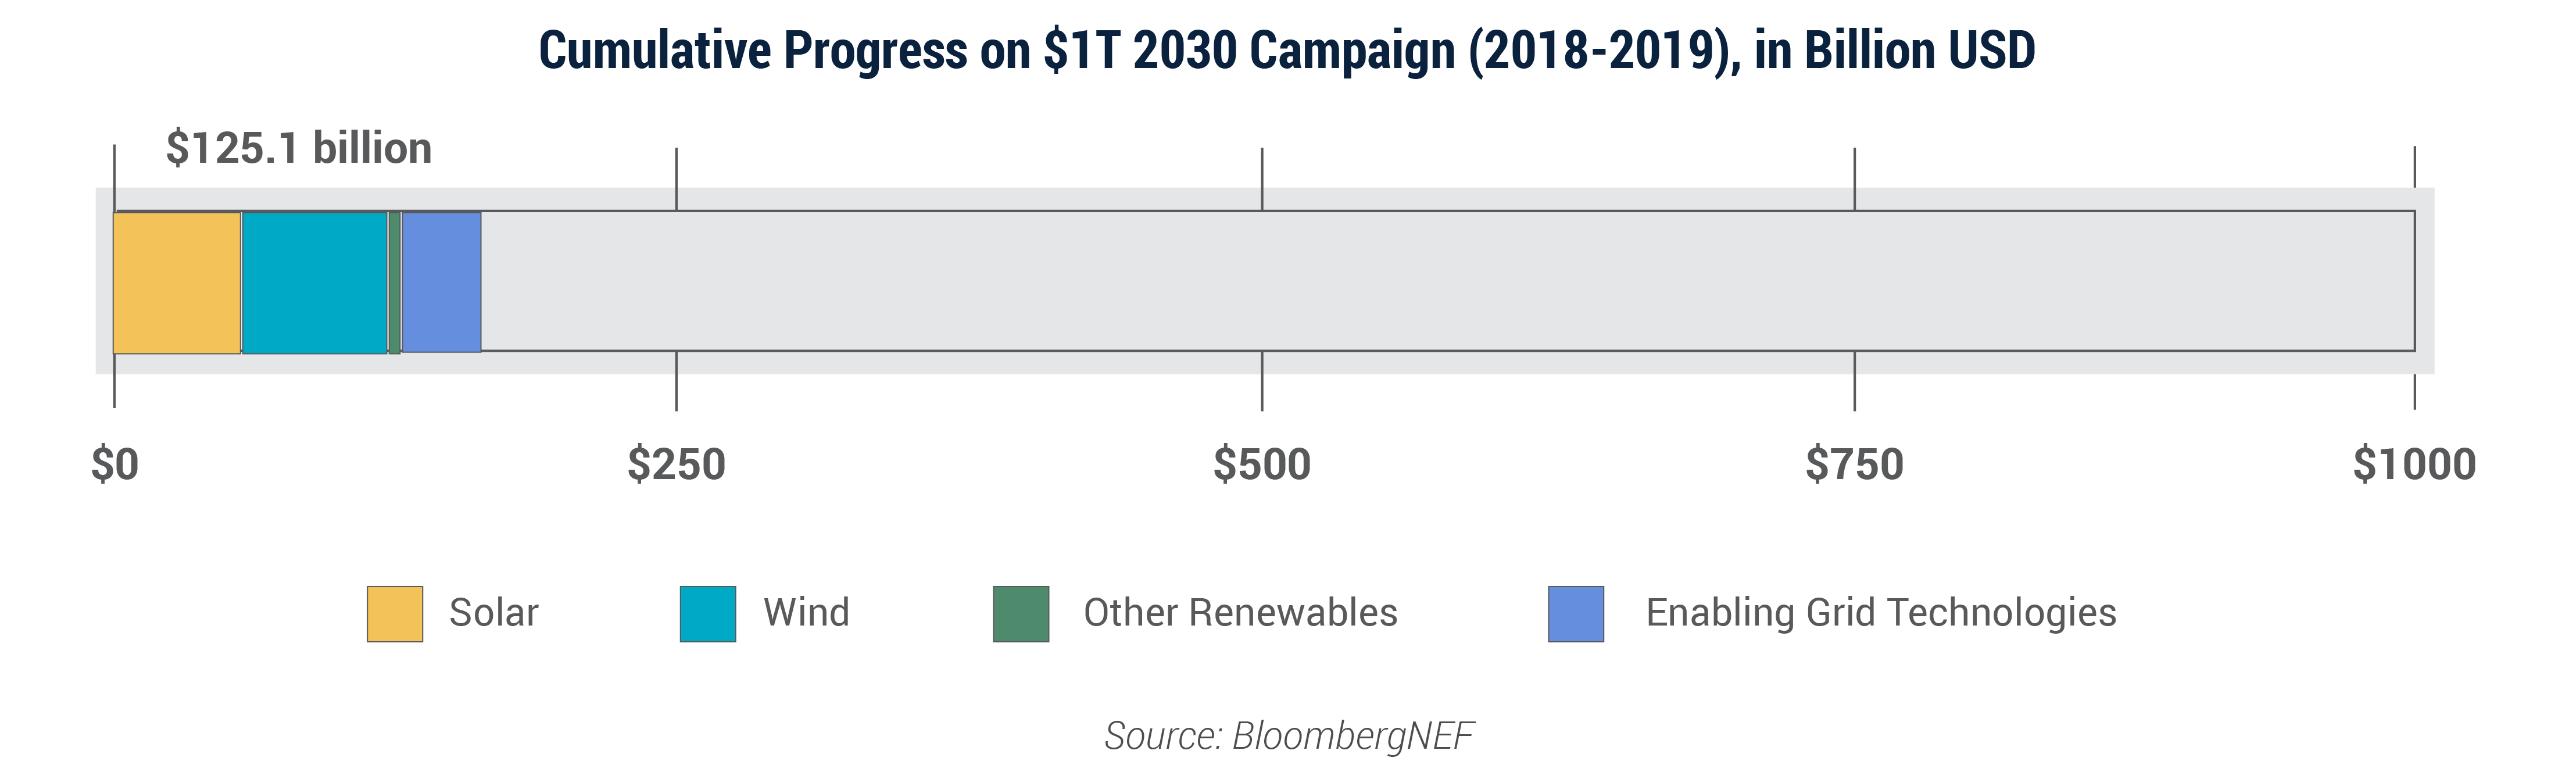 Cumulative Progress on $1T 2030 Campaign (2018-2019), in Billion USD